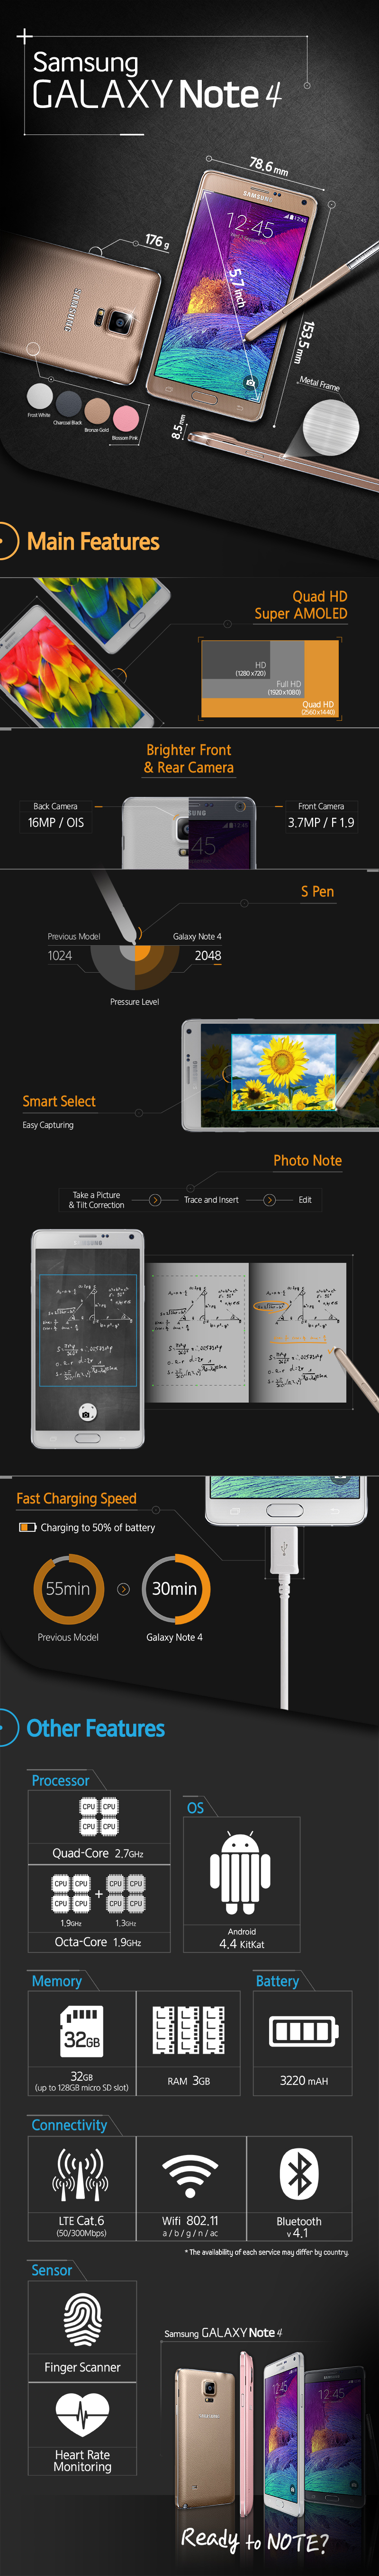 Samsung-Galaxy-Note-4-Infographic.jpg